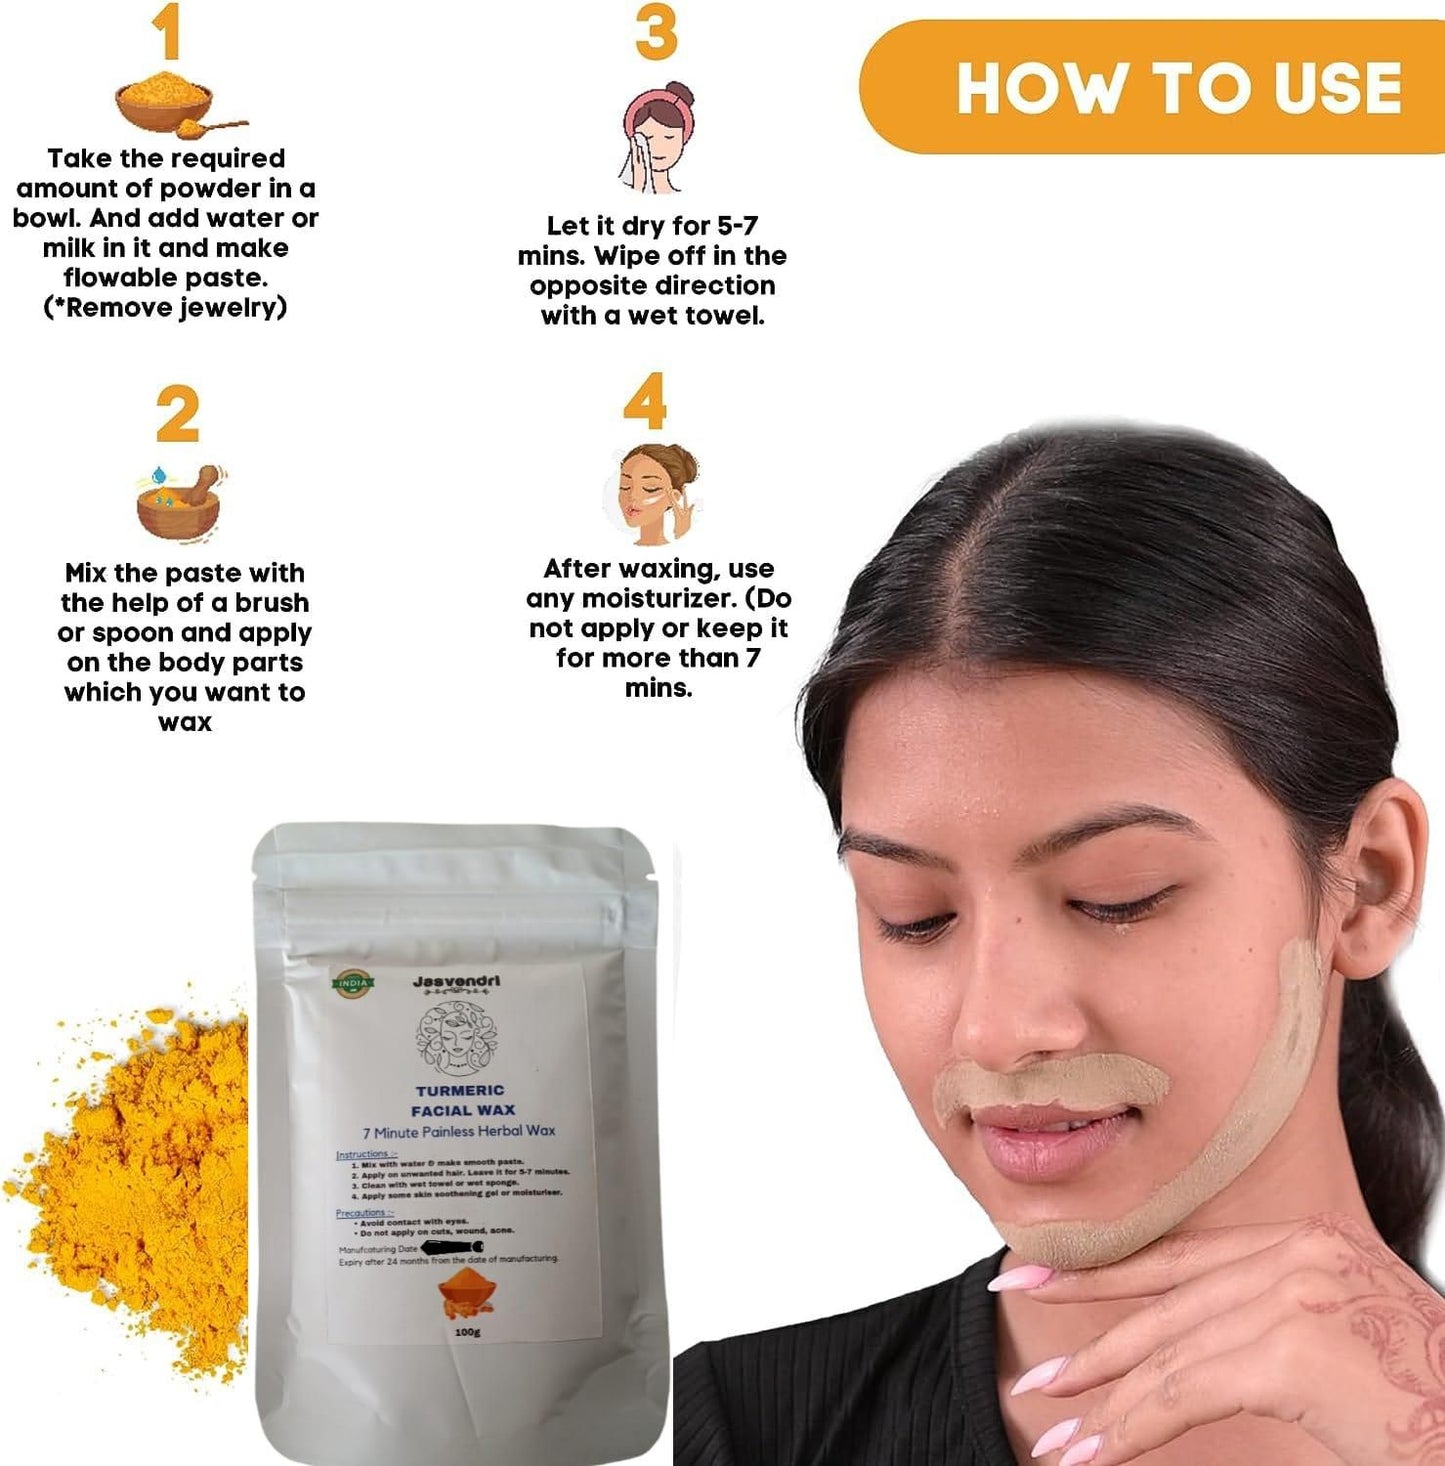 Turmeric Facial Wax - 5 Minute Painless Herbal Wax Powder (100g)